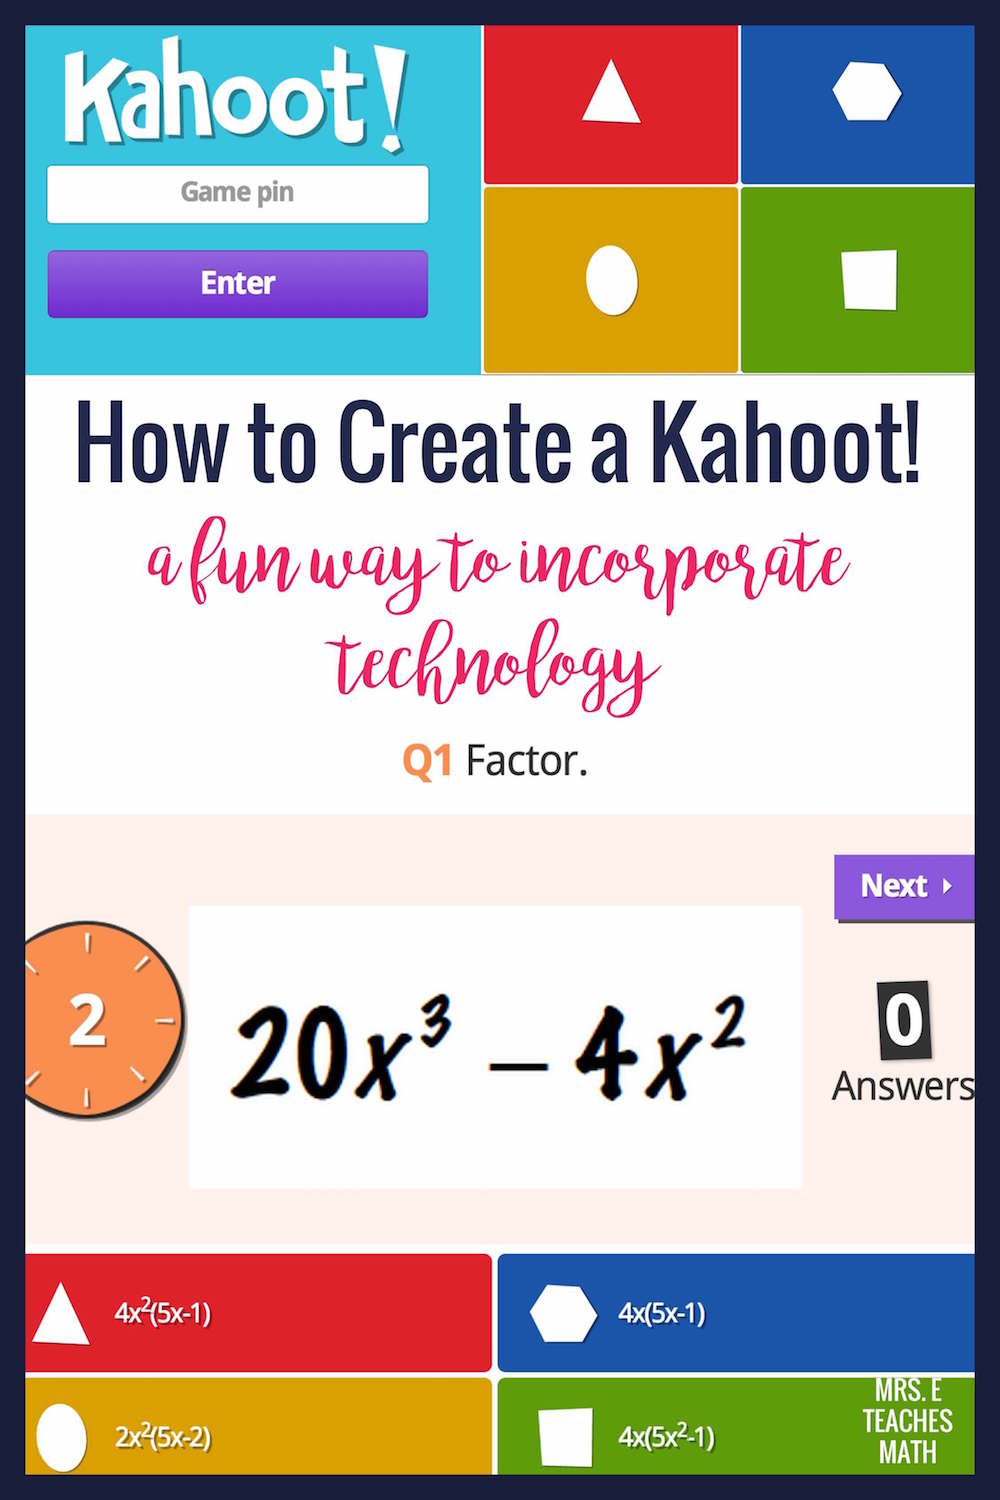 How To Create A Kahoot! | Mrs. E Teaches Math